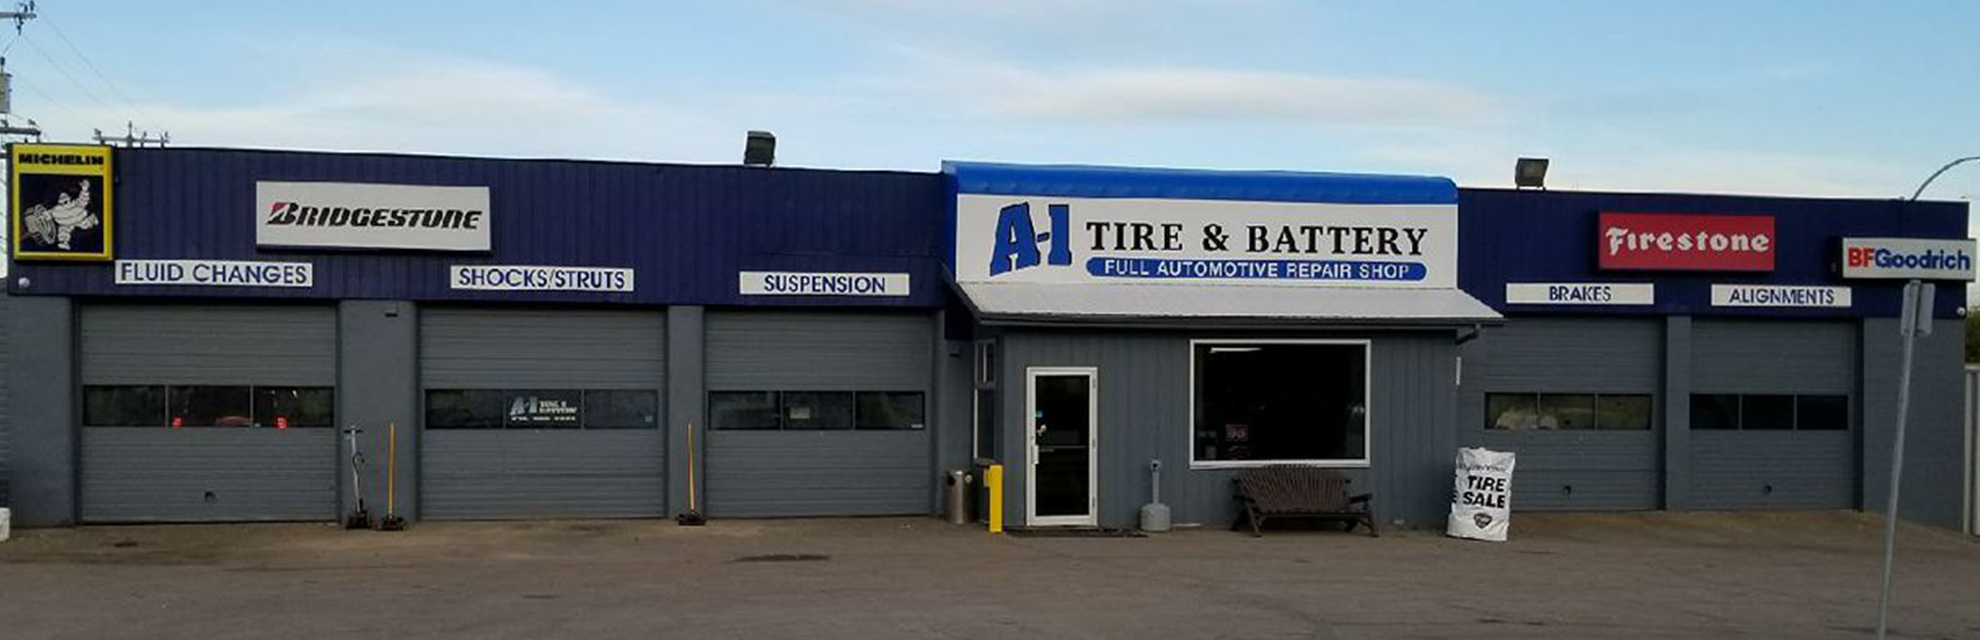 Edmonton Auto Repair & Service Company